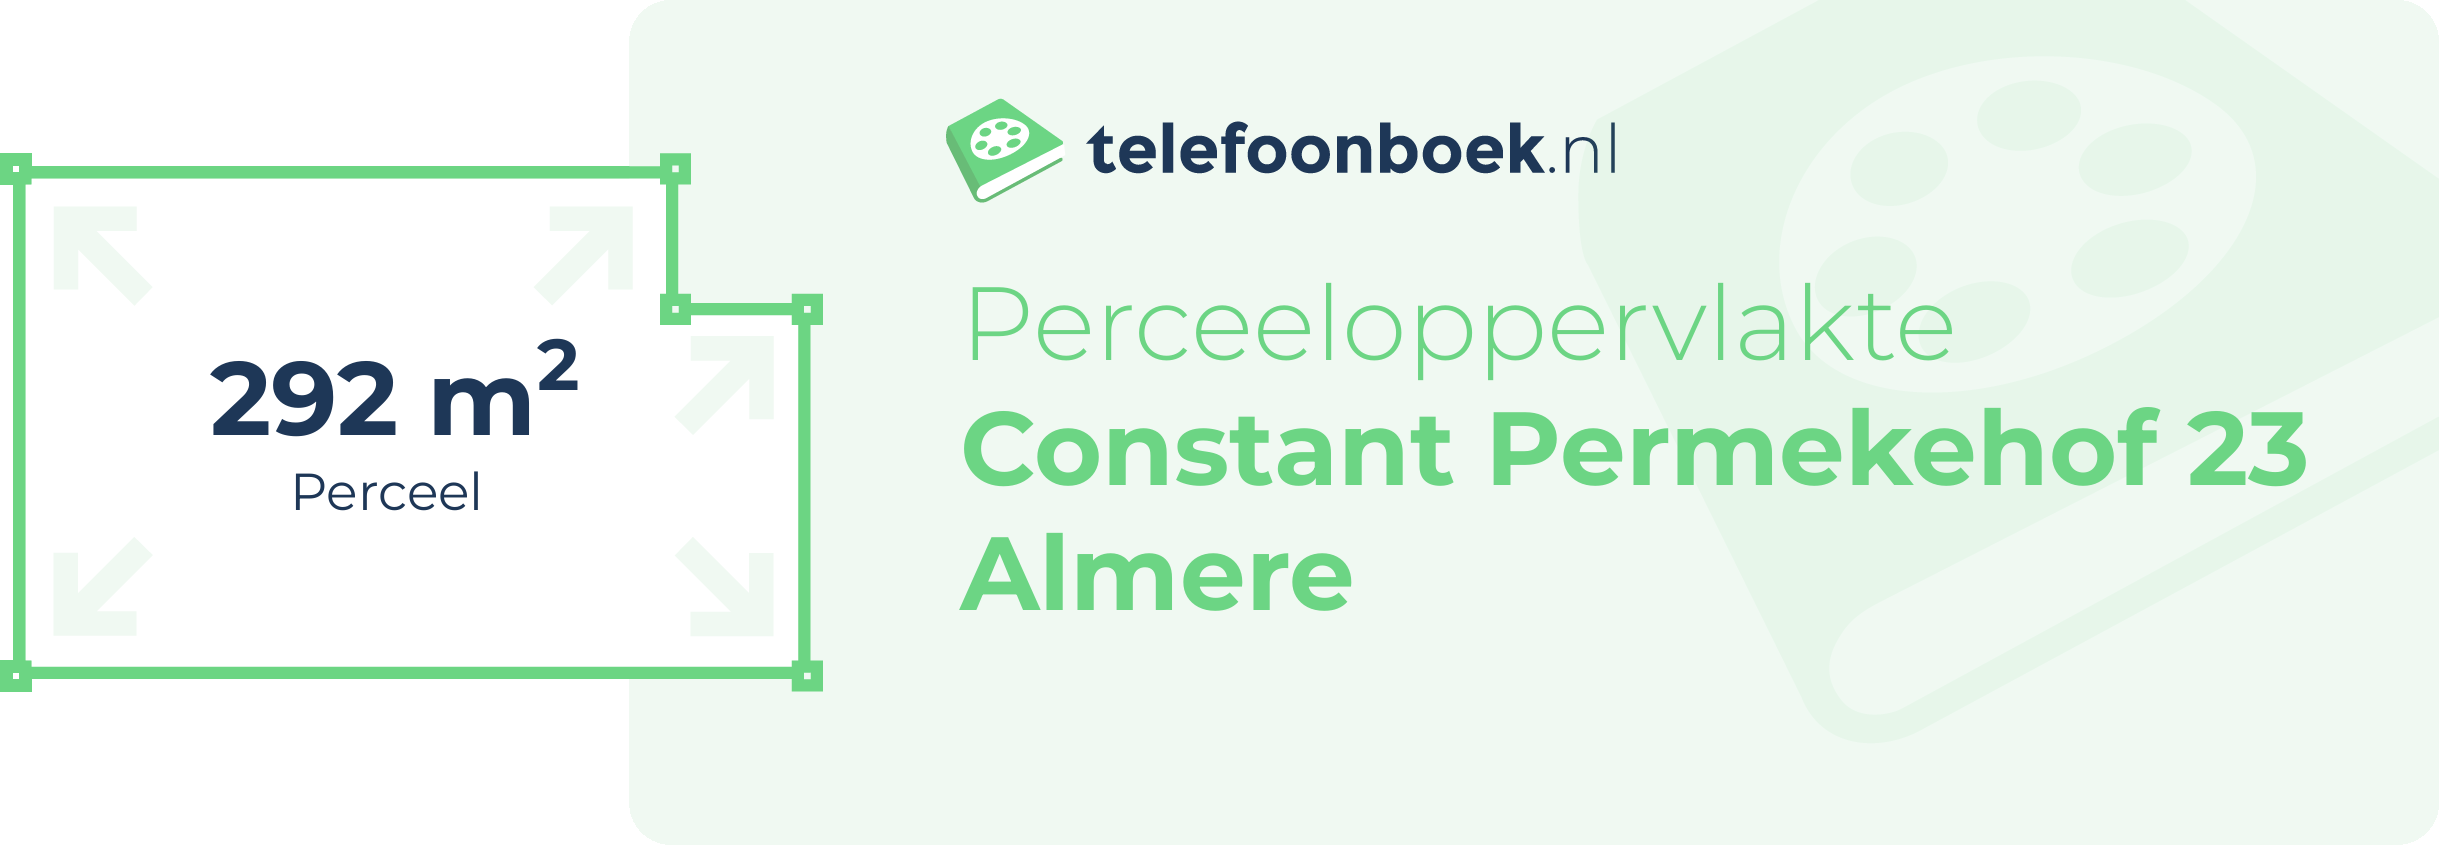 Perceeloppervlakte Constant Permekehof 23 Almere